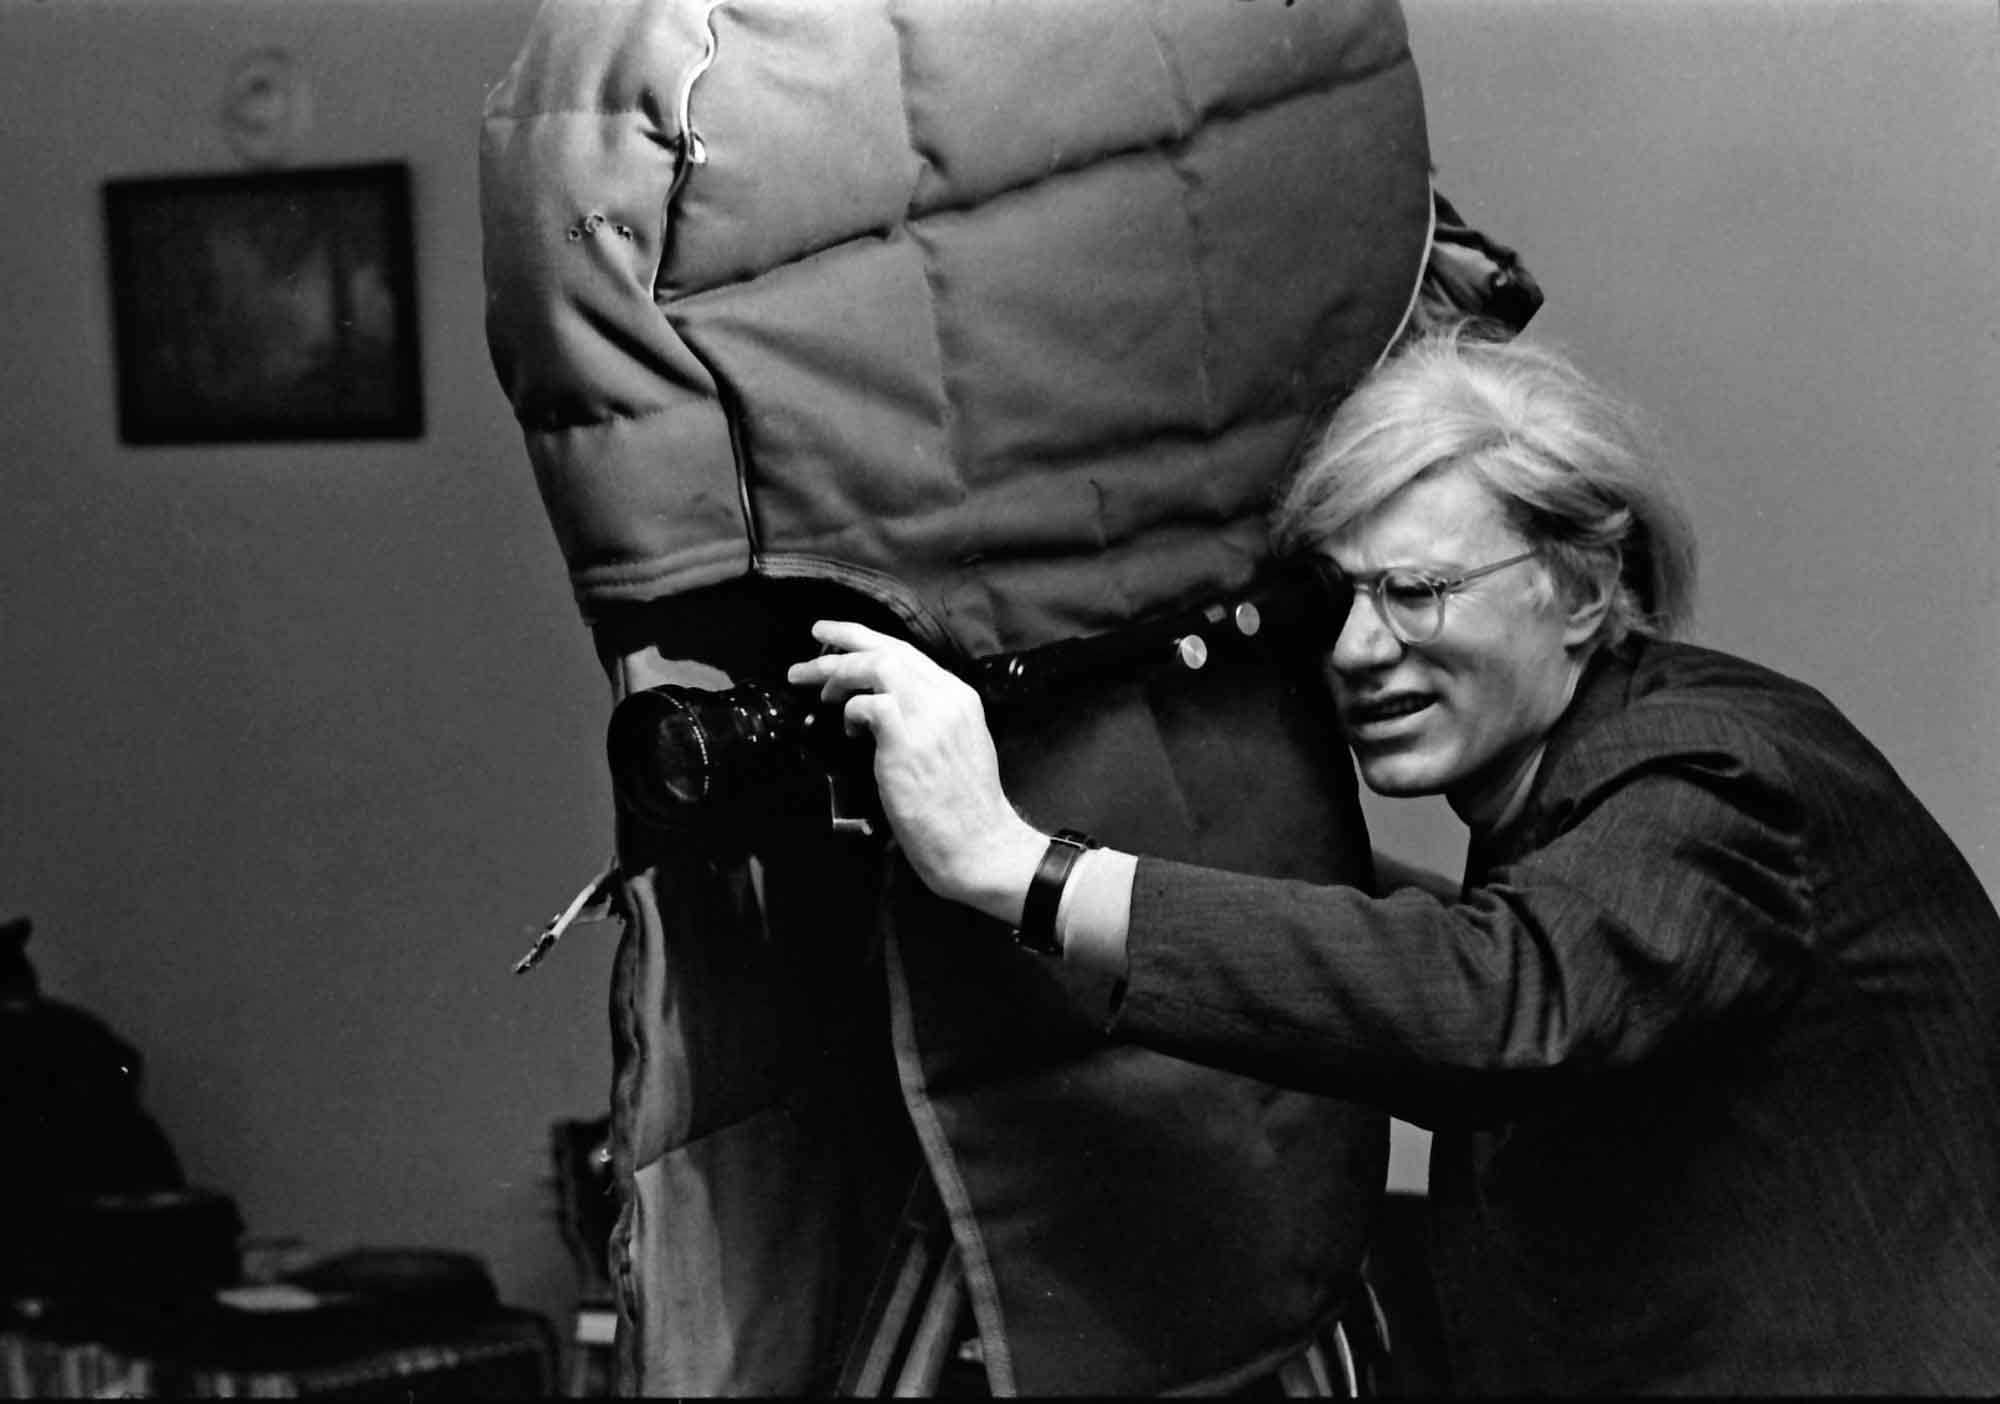 Andy Warhol operating a camera